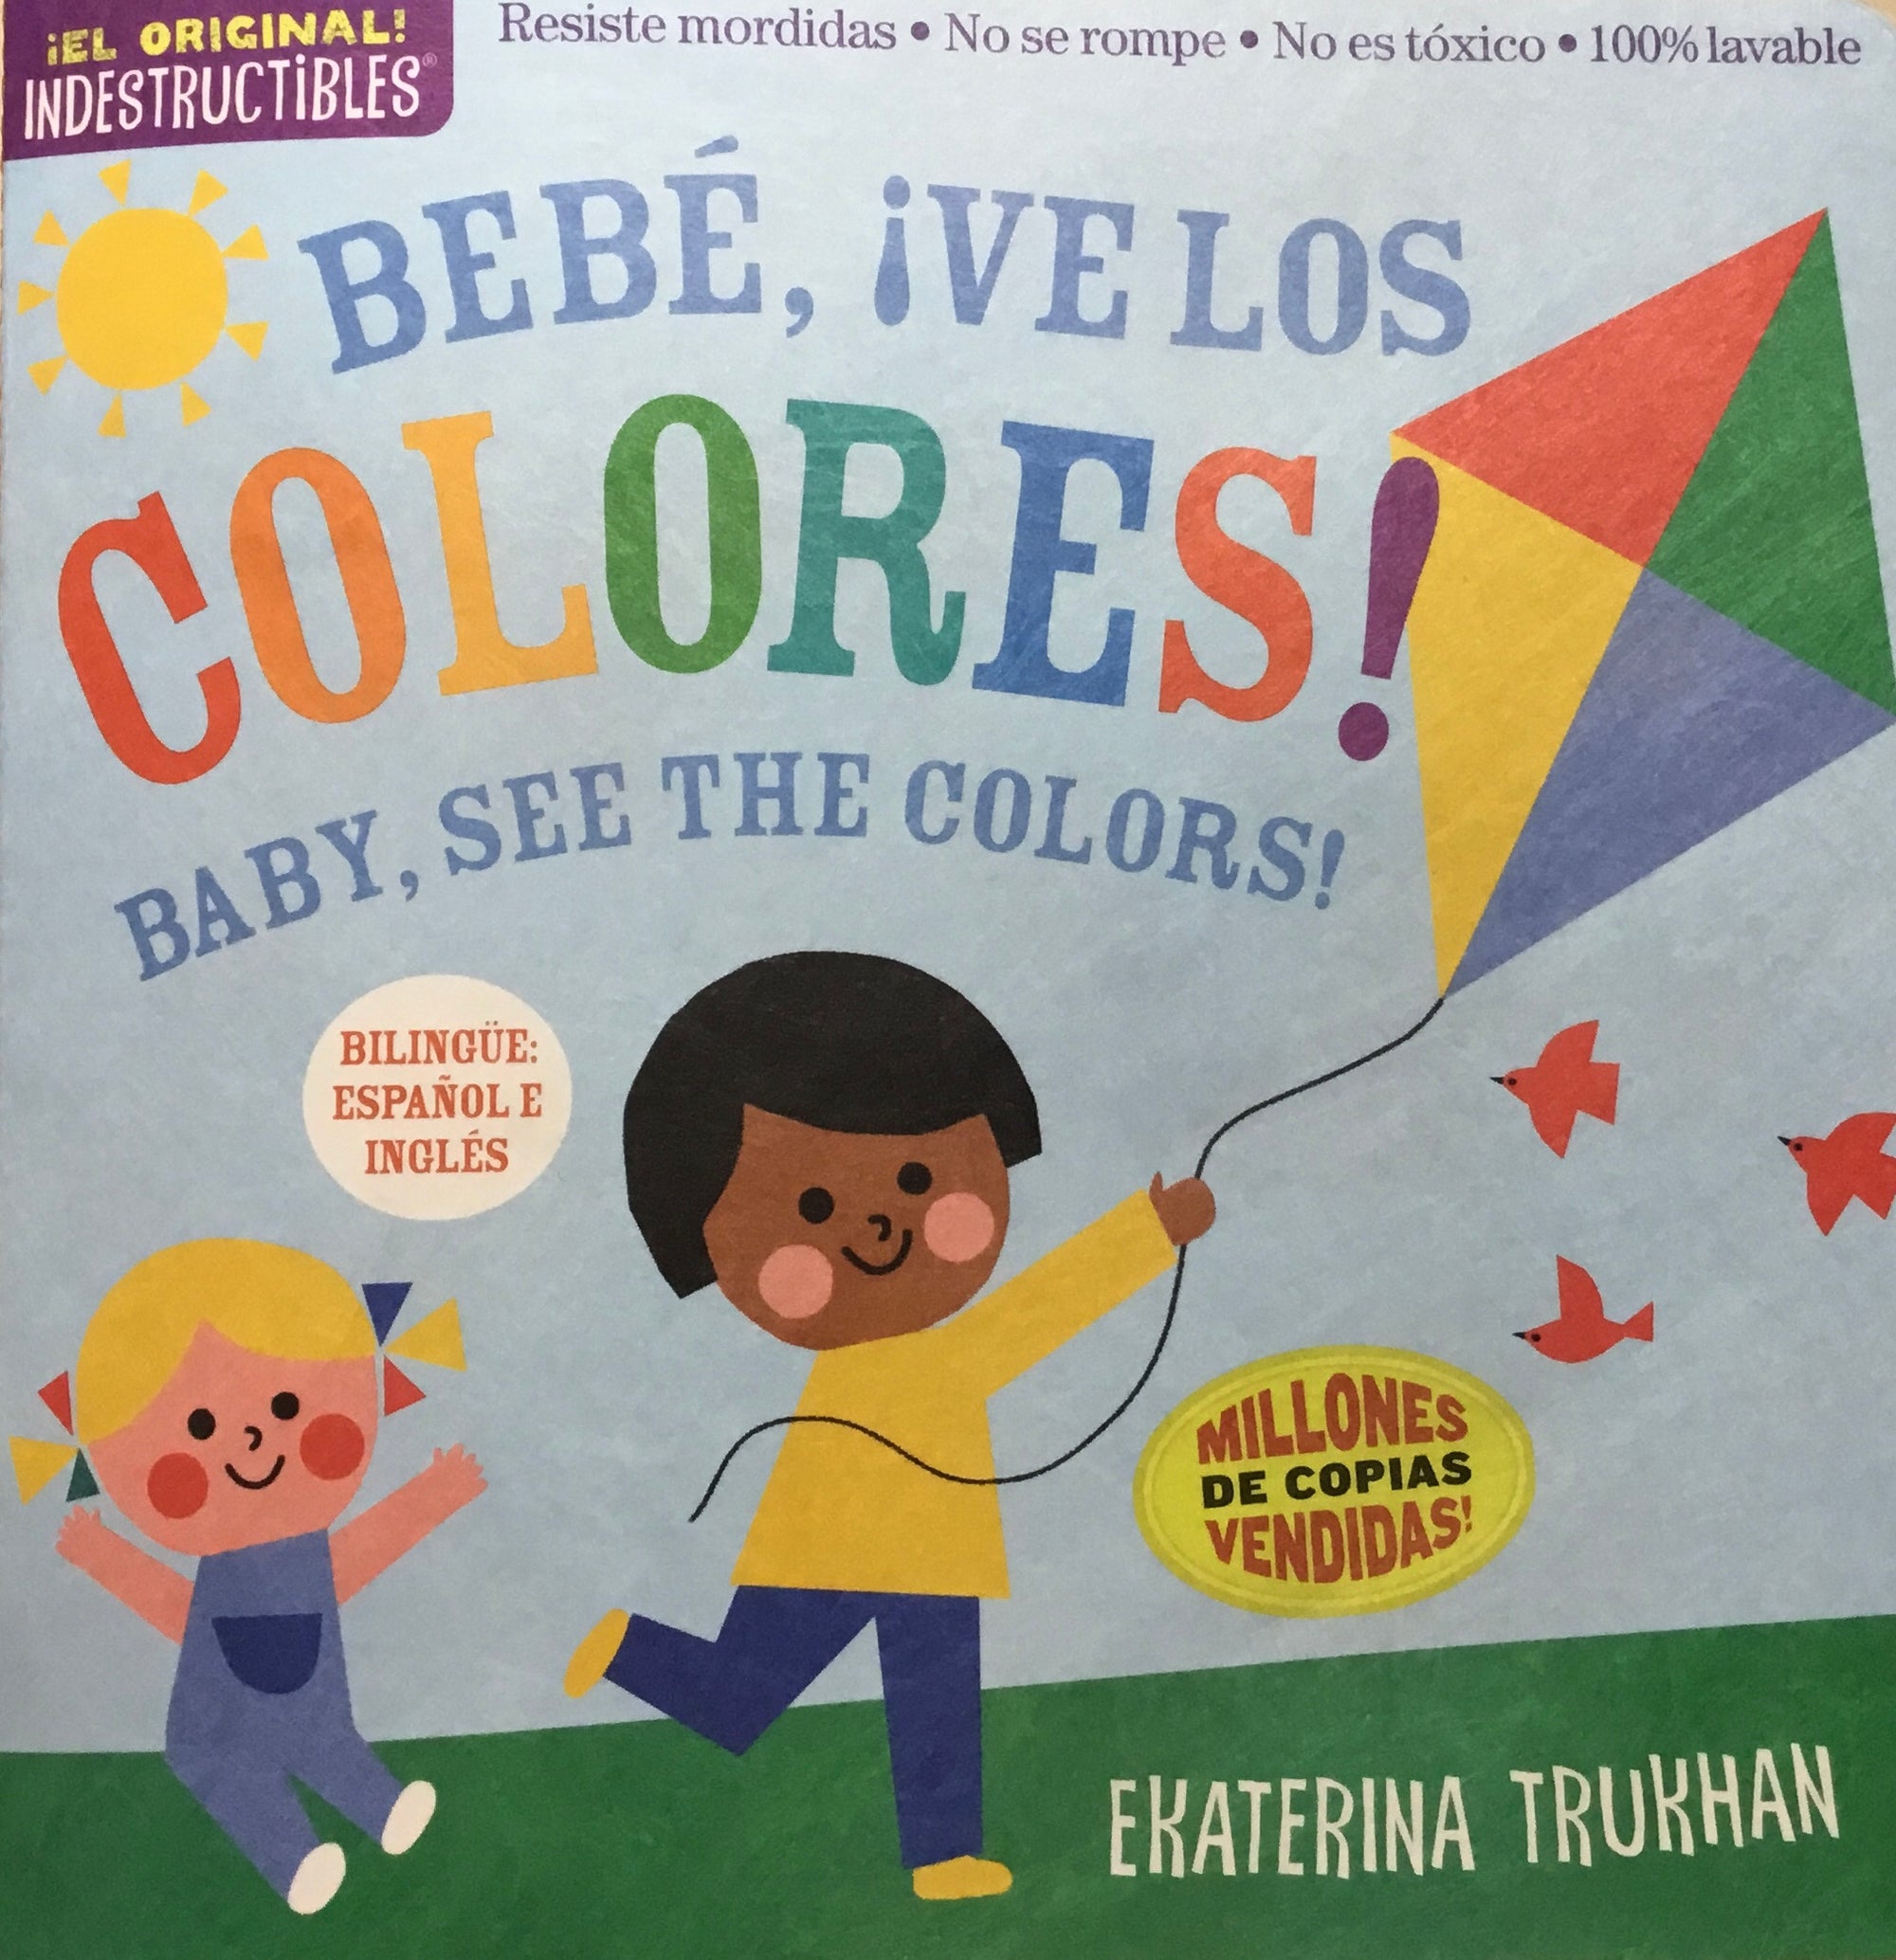 Indestructibles Books - Bebe, Velos Los Colores- Spanish